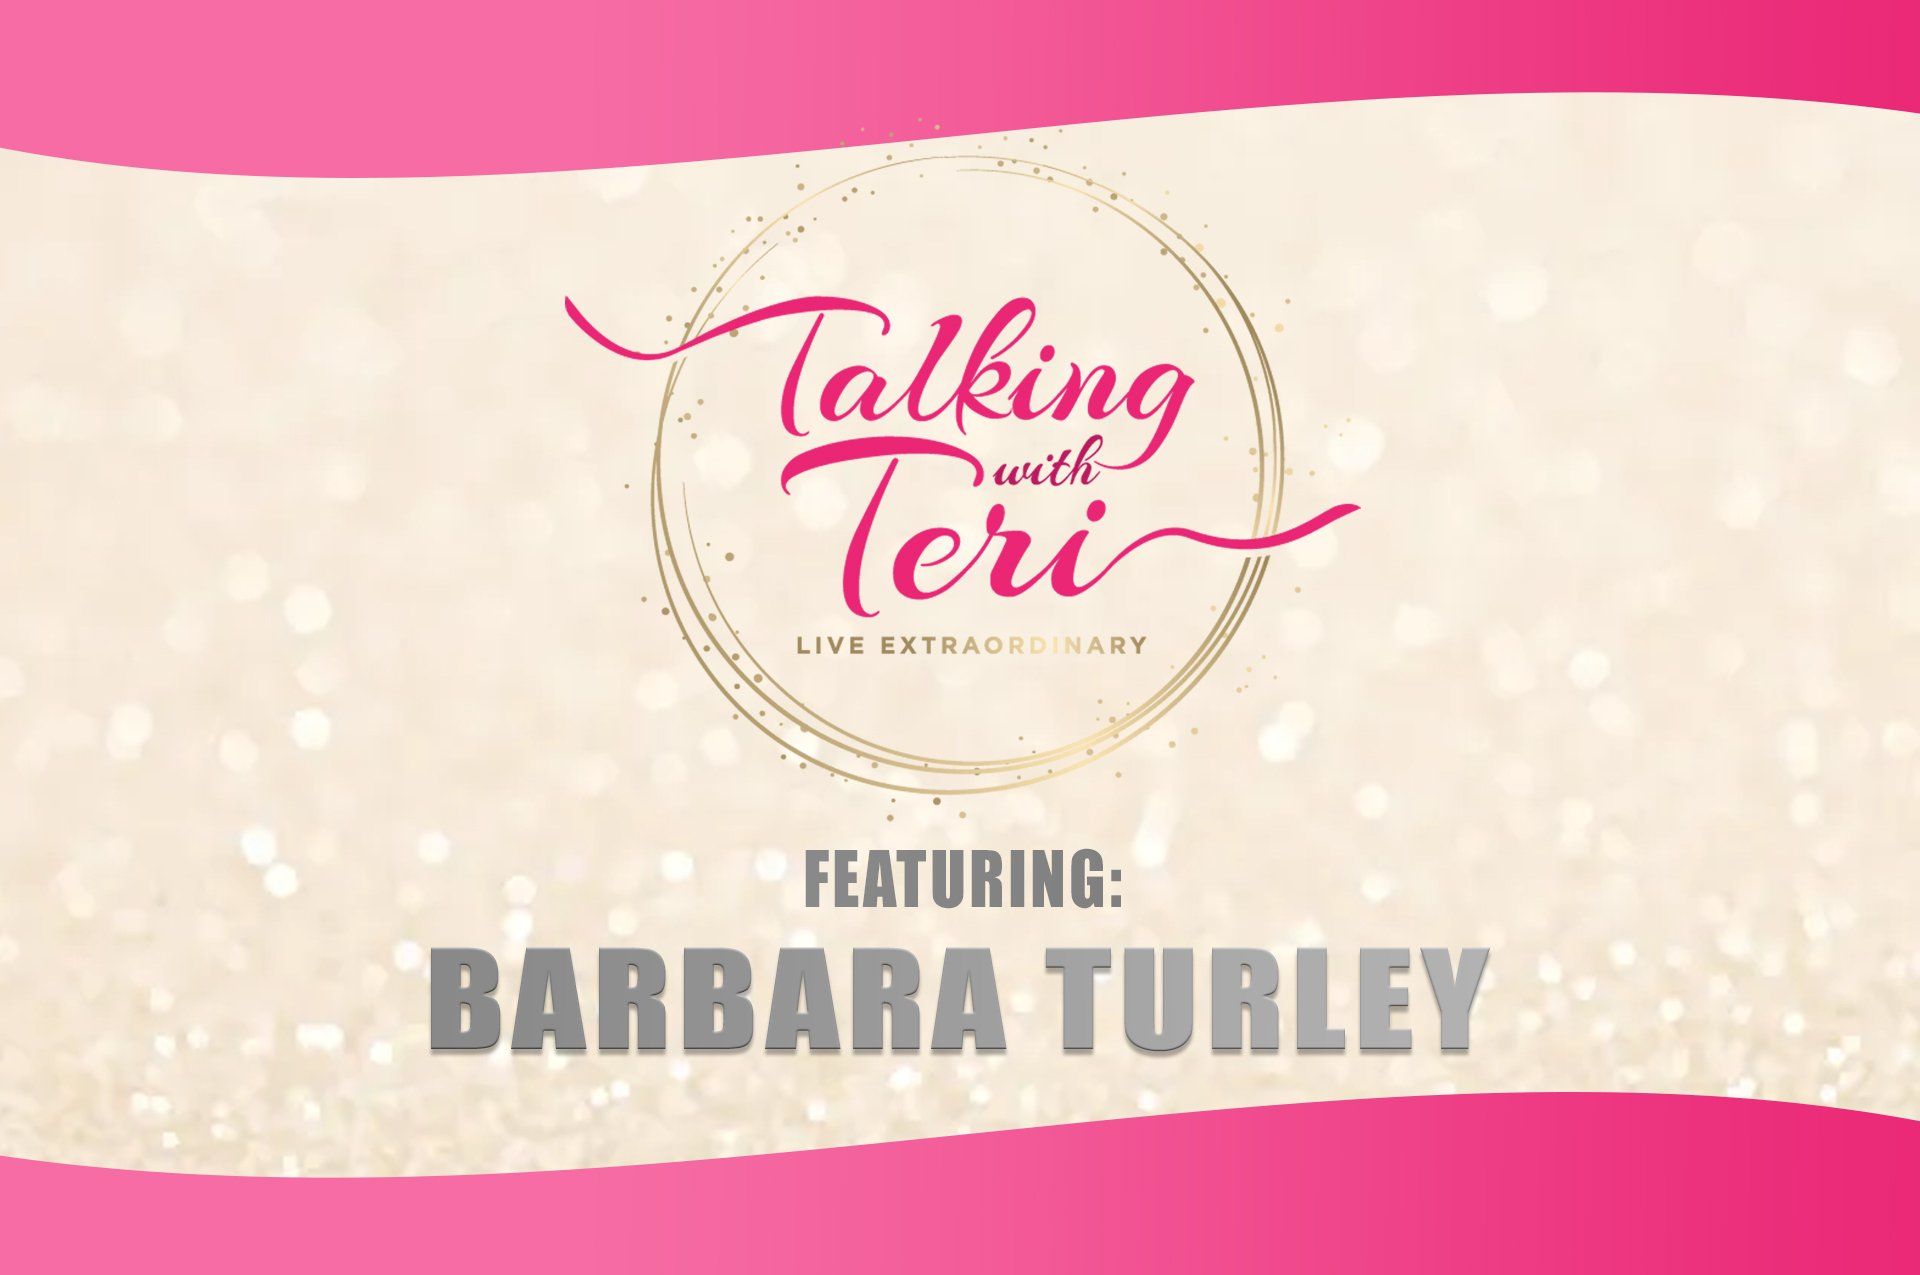 Talking With Teri and Barbara Turley